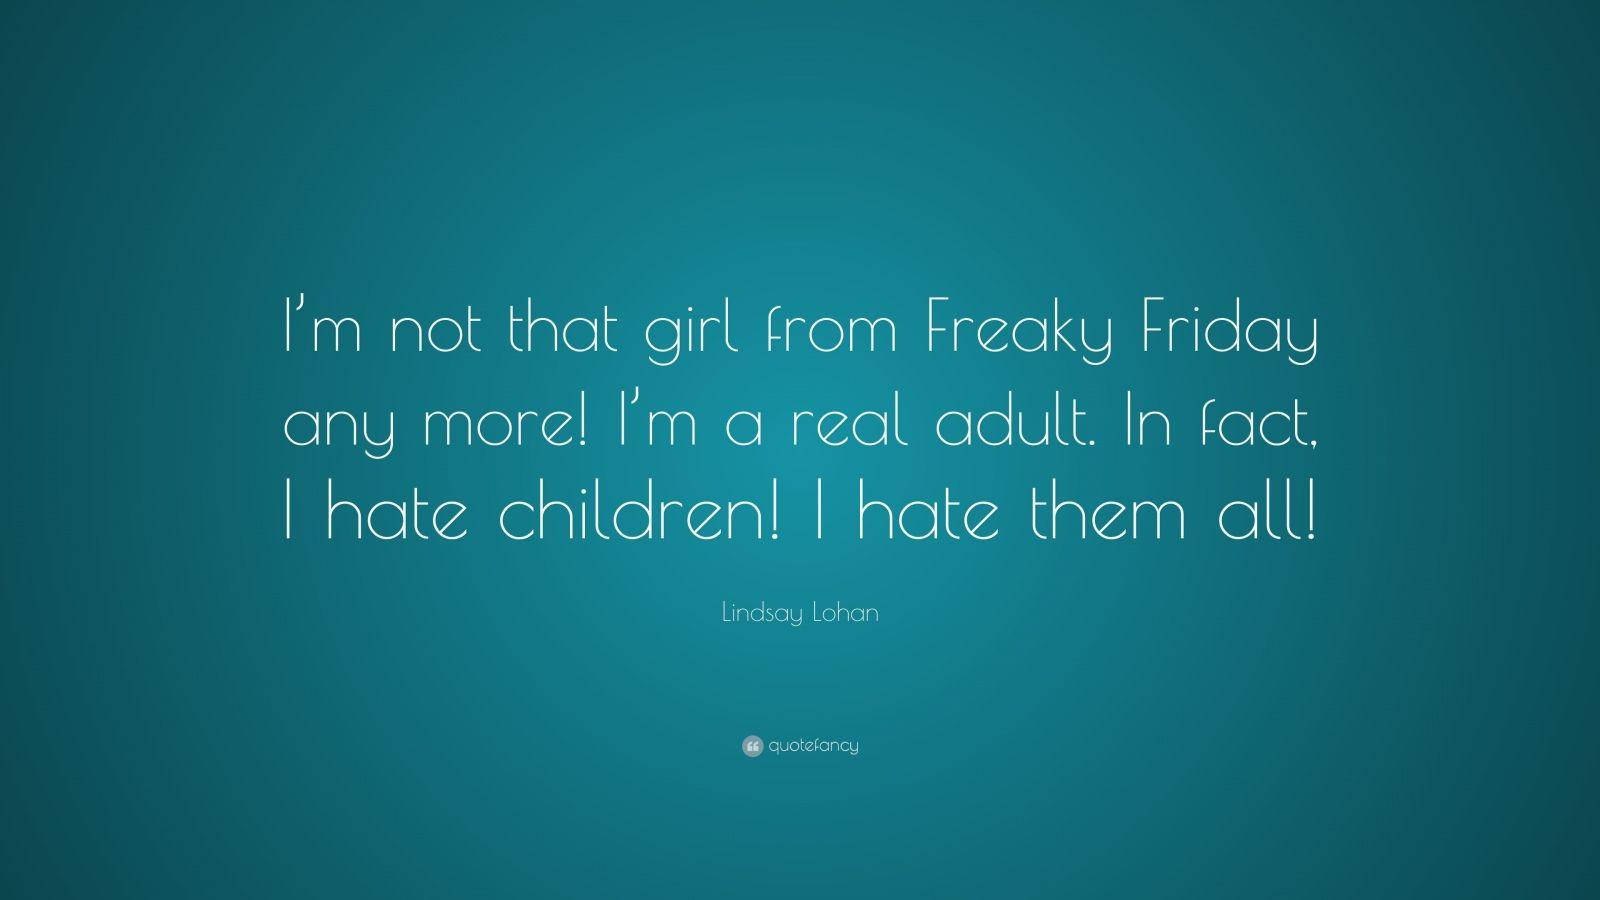 Freaky Friday Lindsay Lohan Quotation Wallpaper